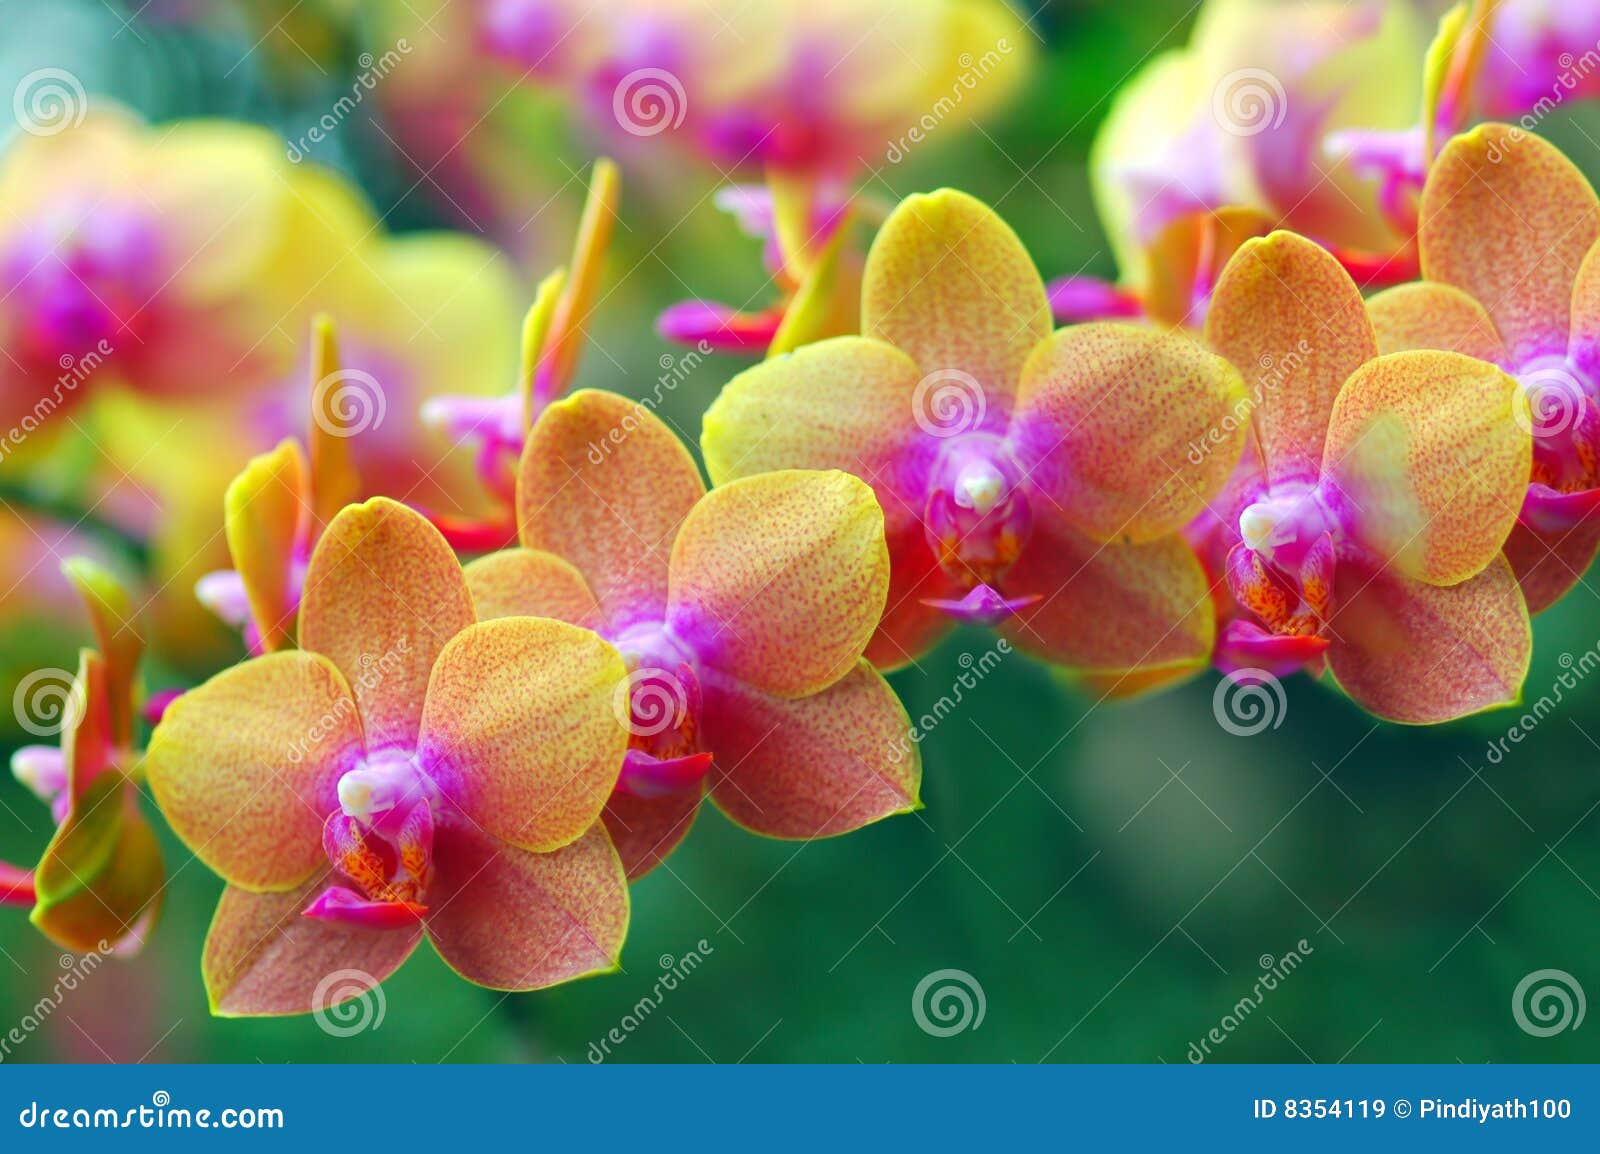 golden orchids